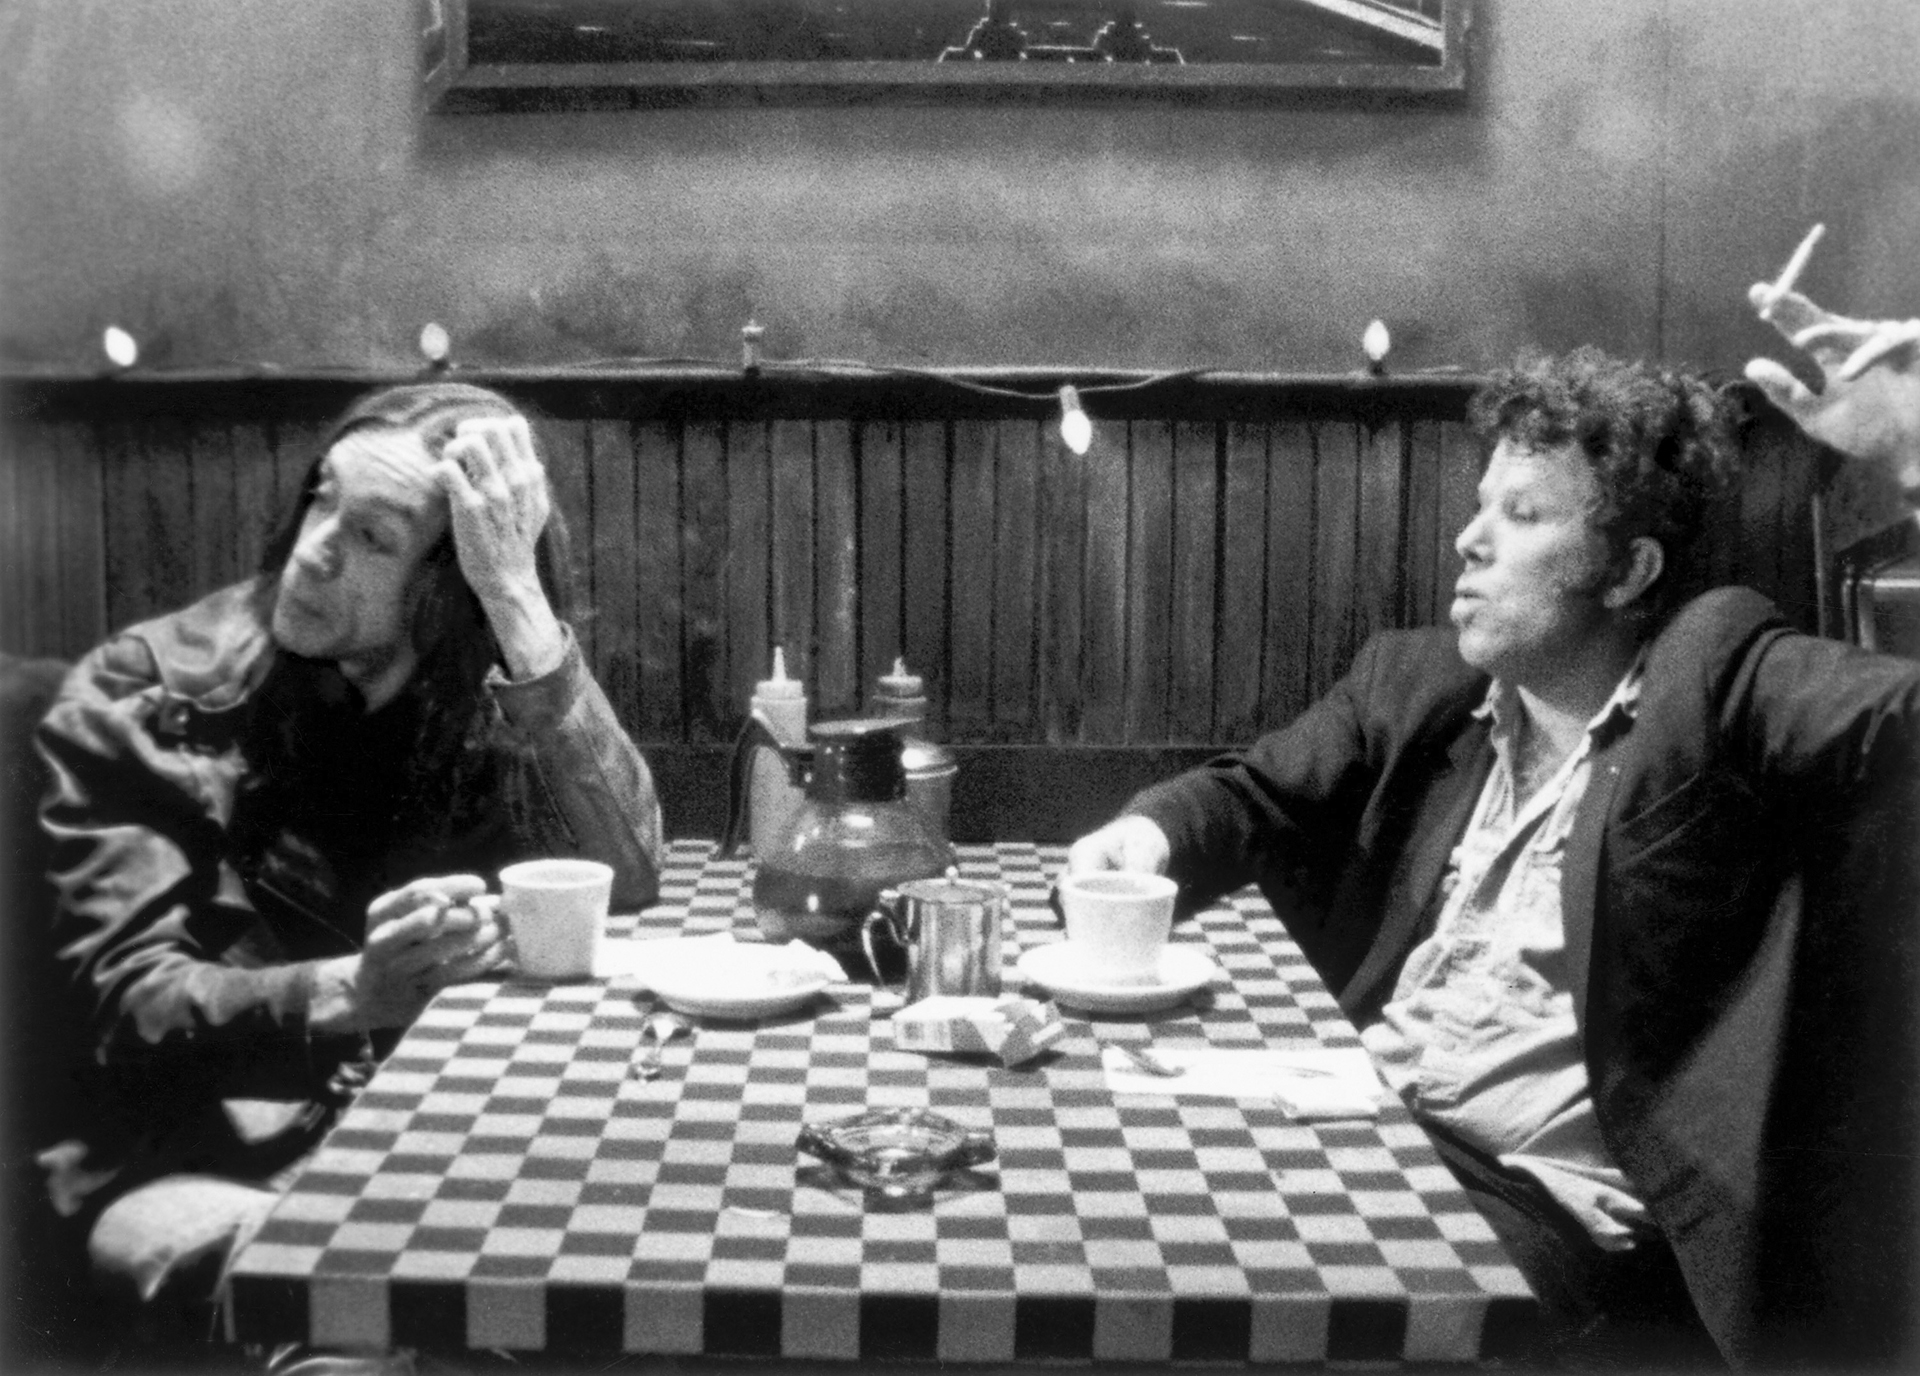 Iggy Pop and Tom Waits in Jim Jarmusch's Coffee & Cigarettes